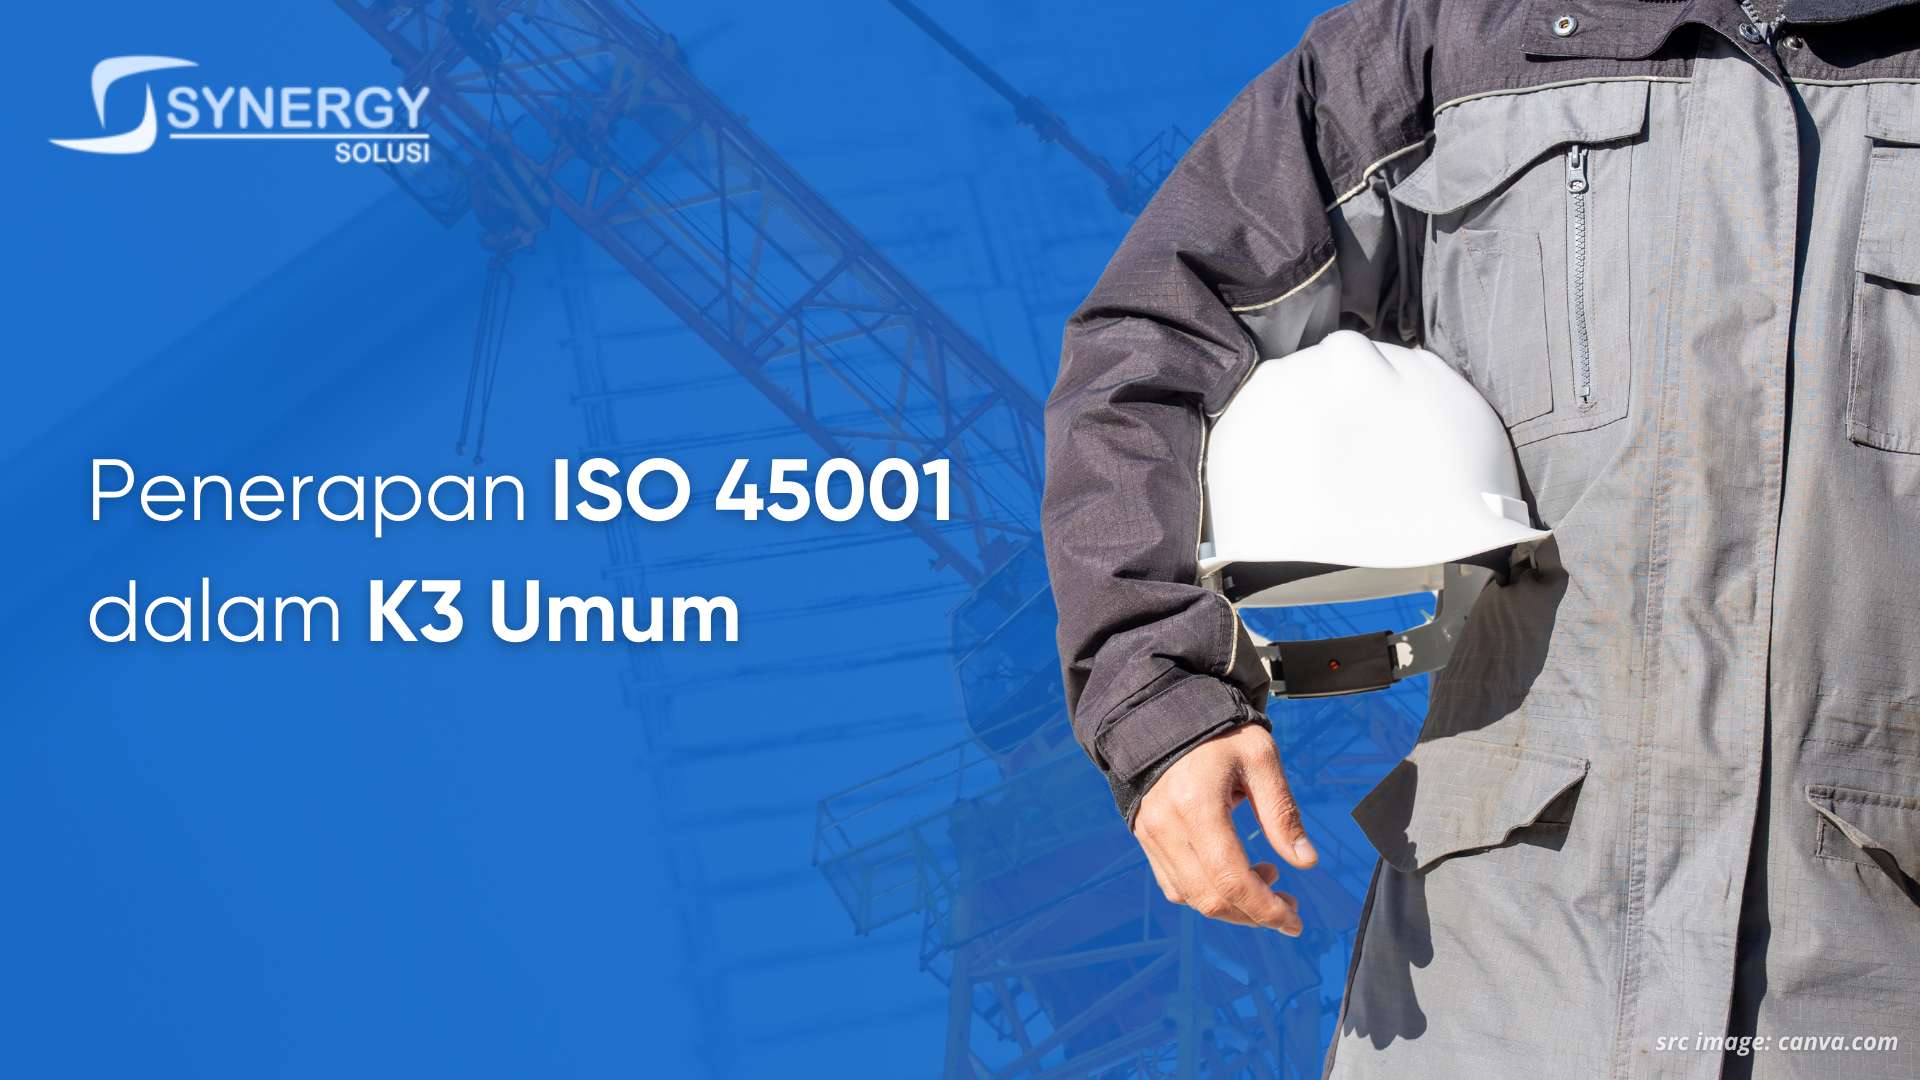 Penjelasan Sertifikasi ISO 45001